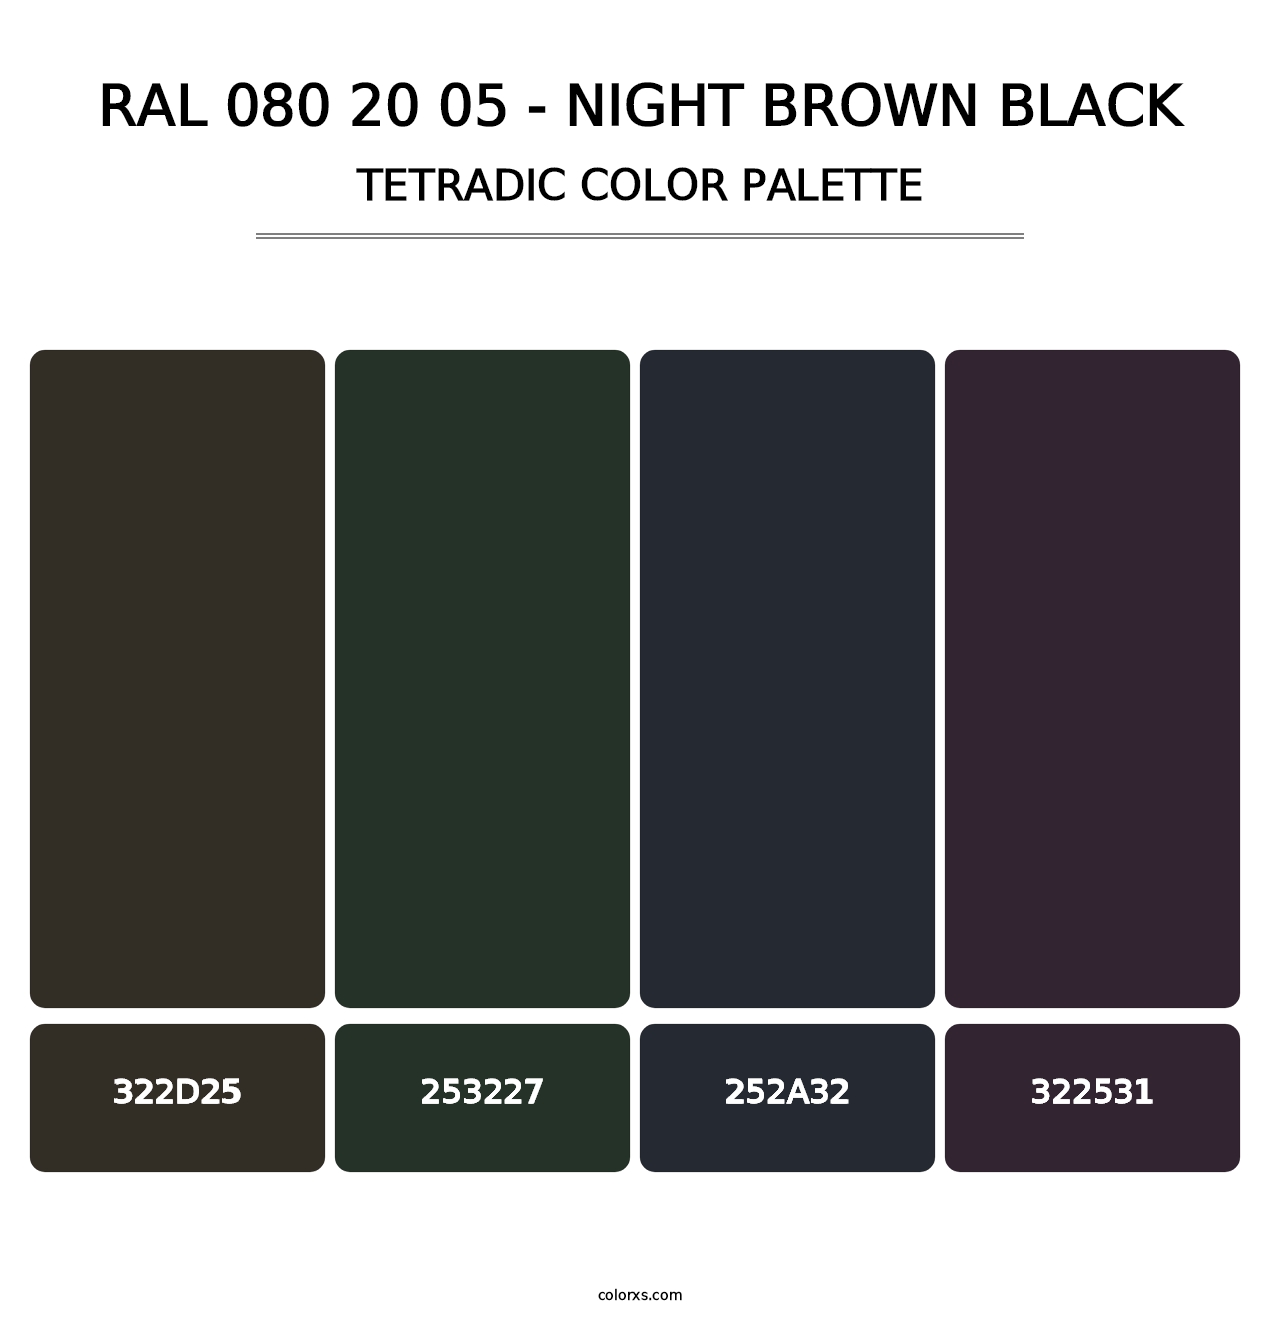 RAL 080 20 05 - Night Brown Black - Tetradic Color Palette